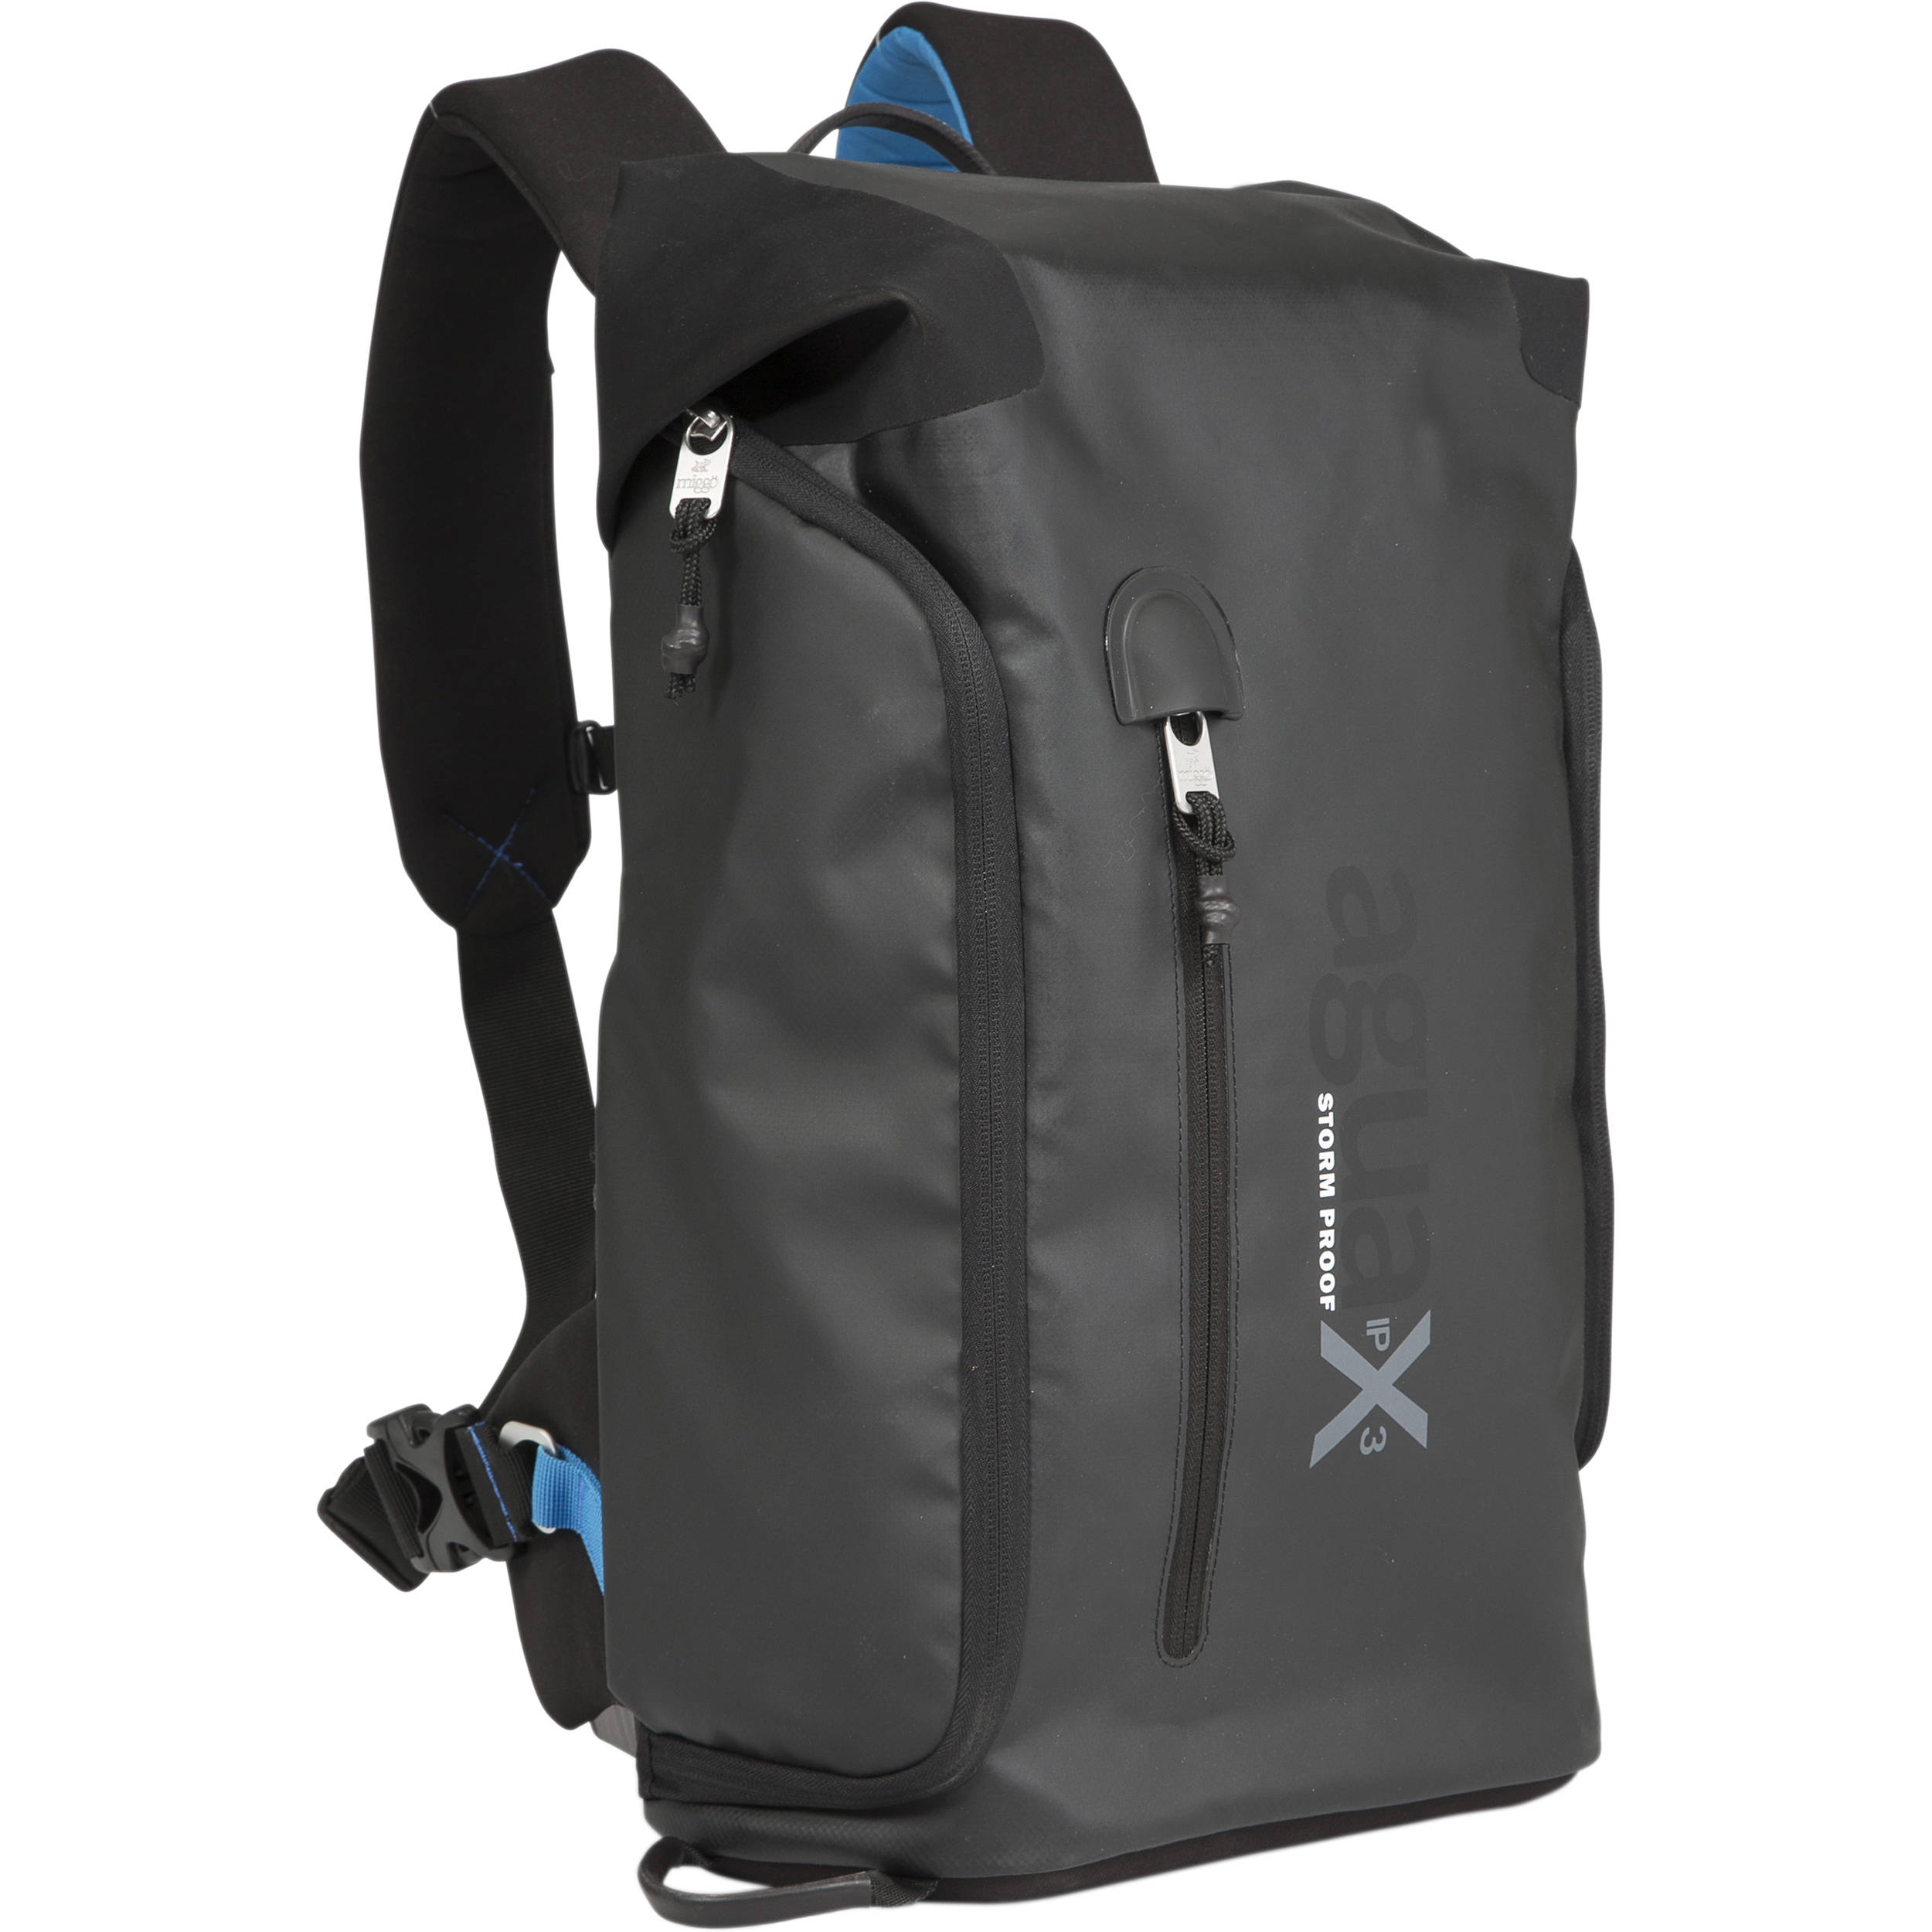 victoria sport backpack